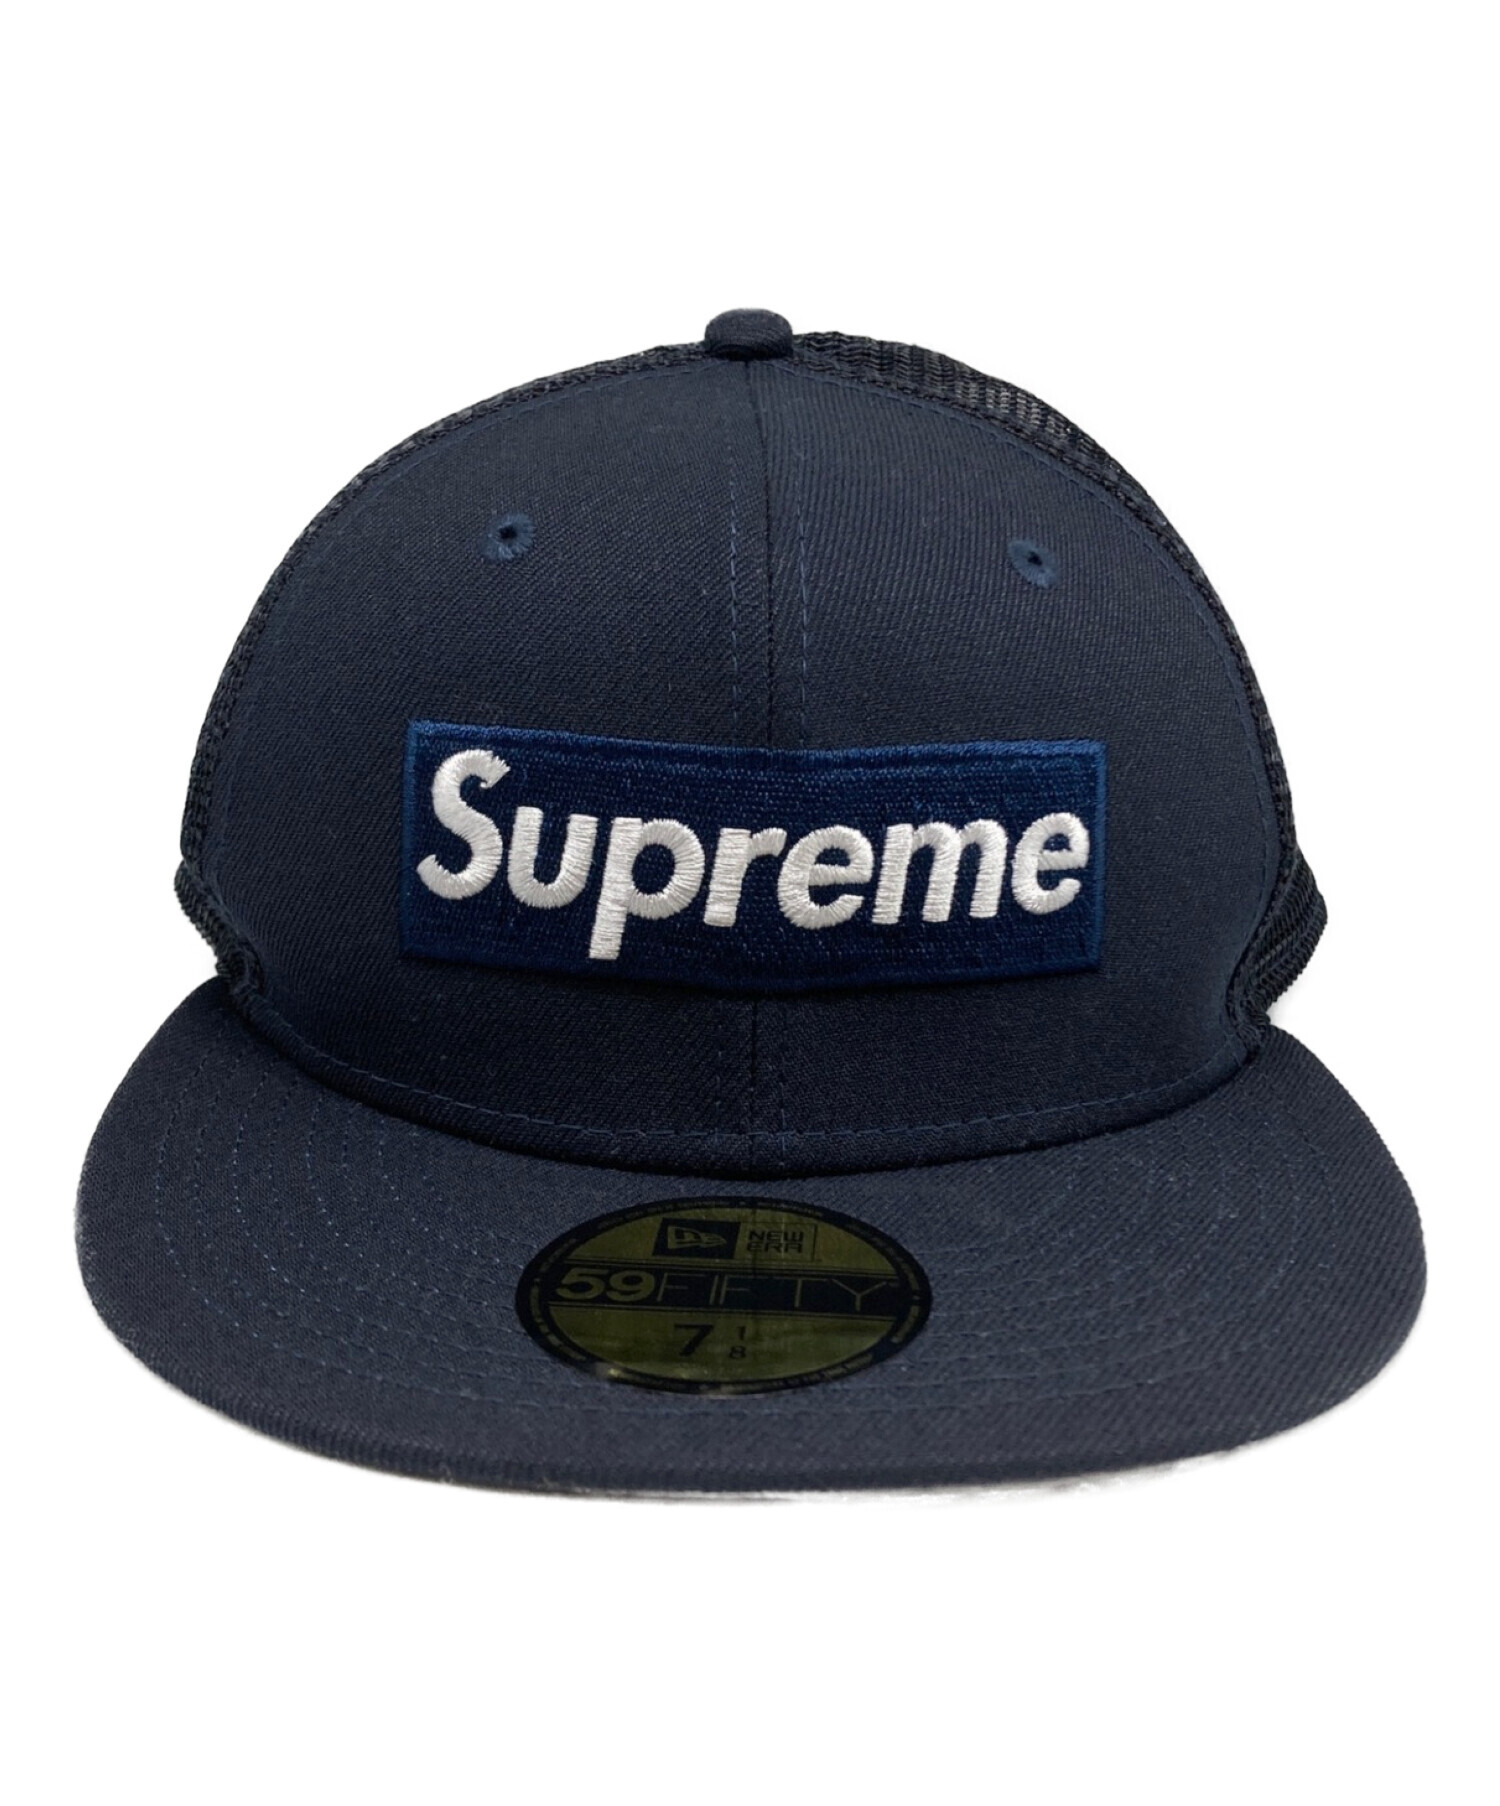 supreme ネイビーキャップ - 帽子